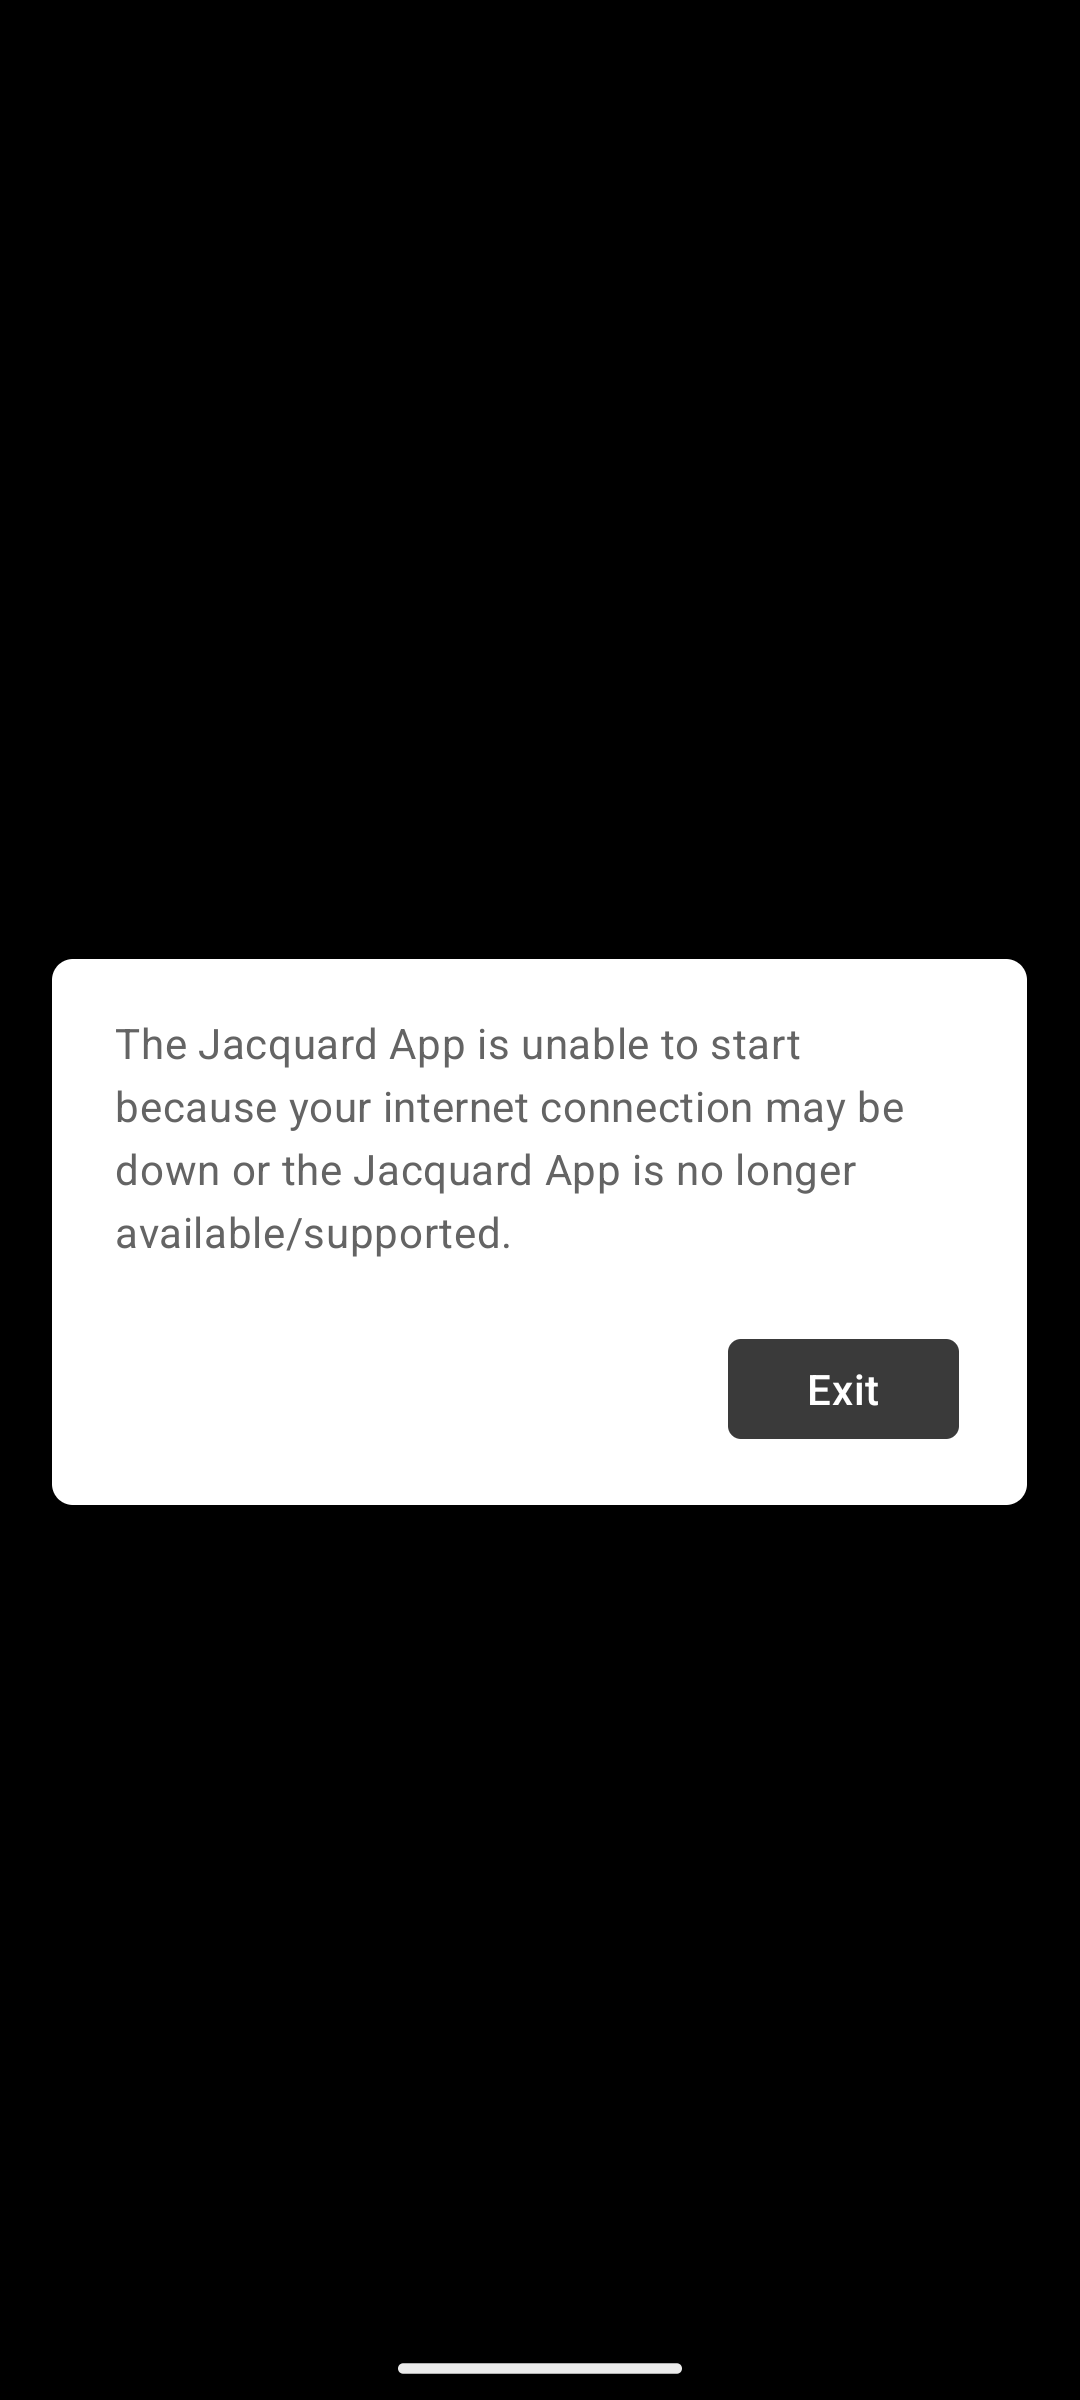 Jacquard: Google shutting down smart fabric app in April